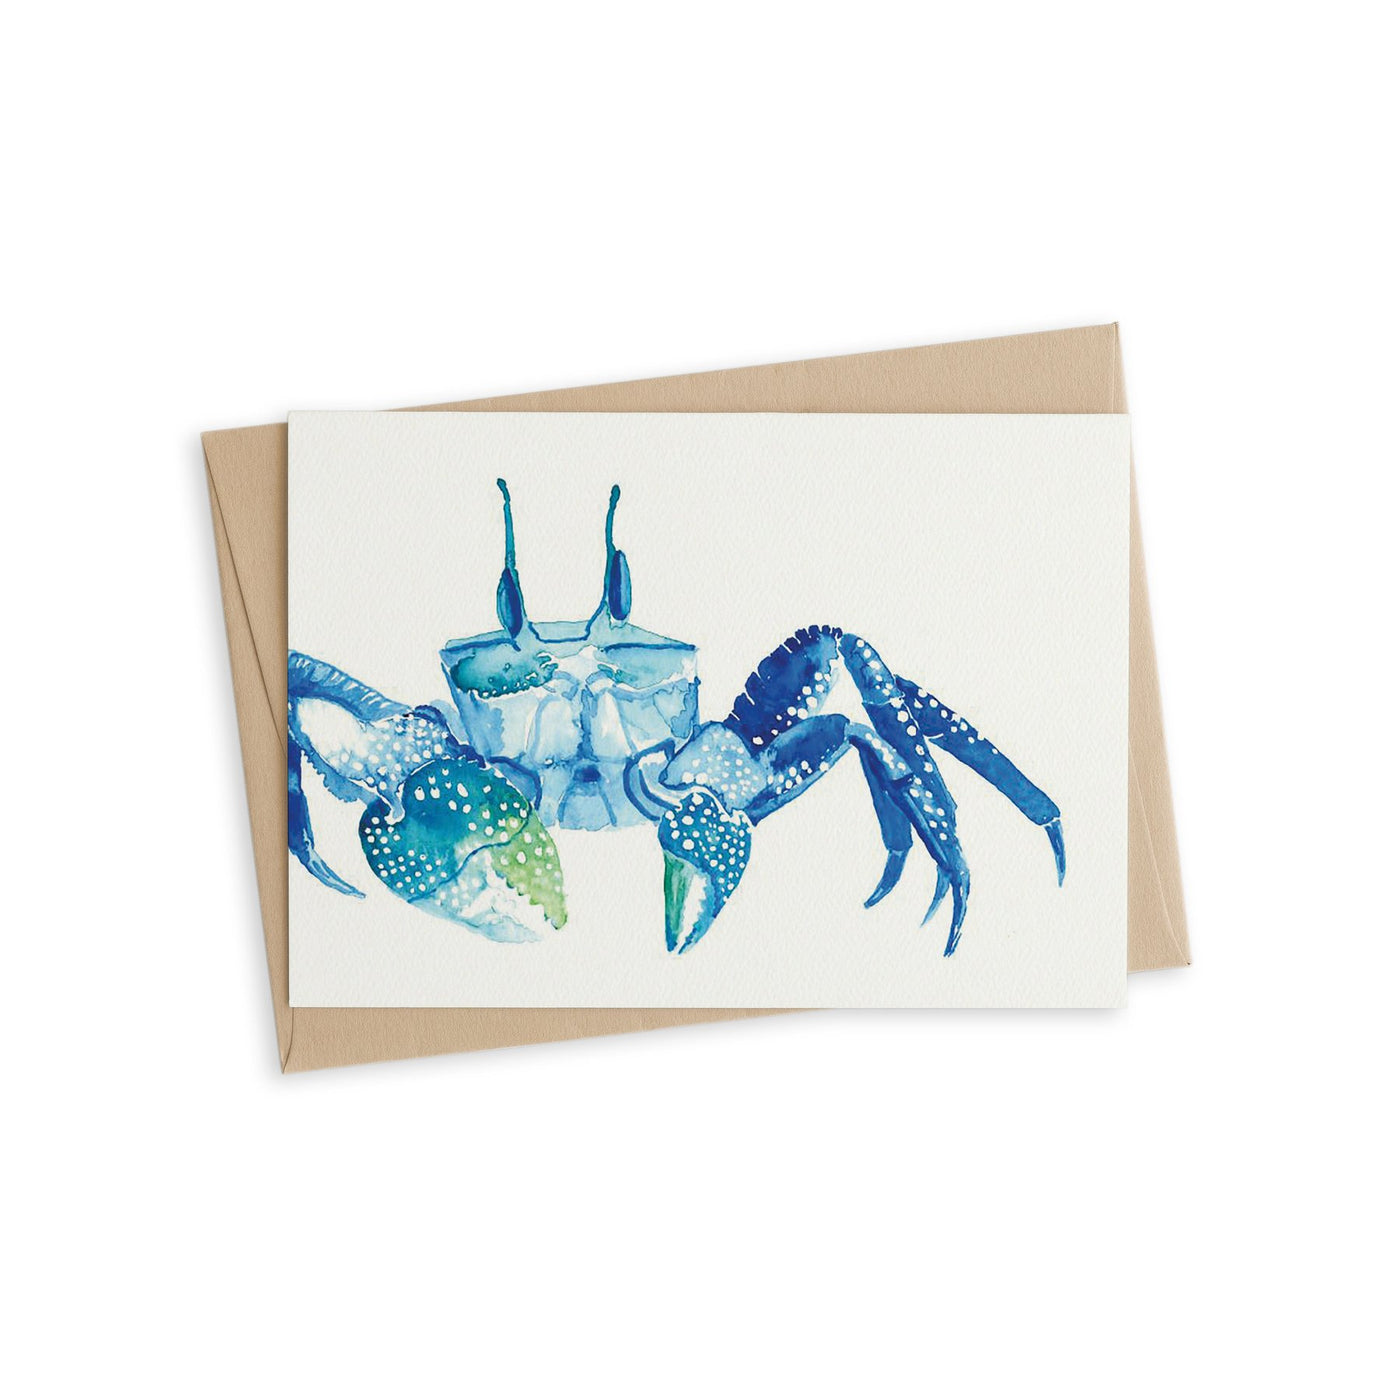 Sebastian The Crab Greeting Card